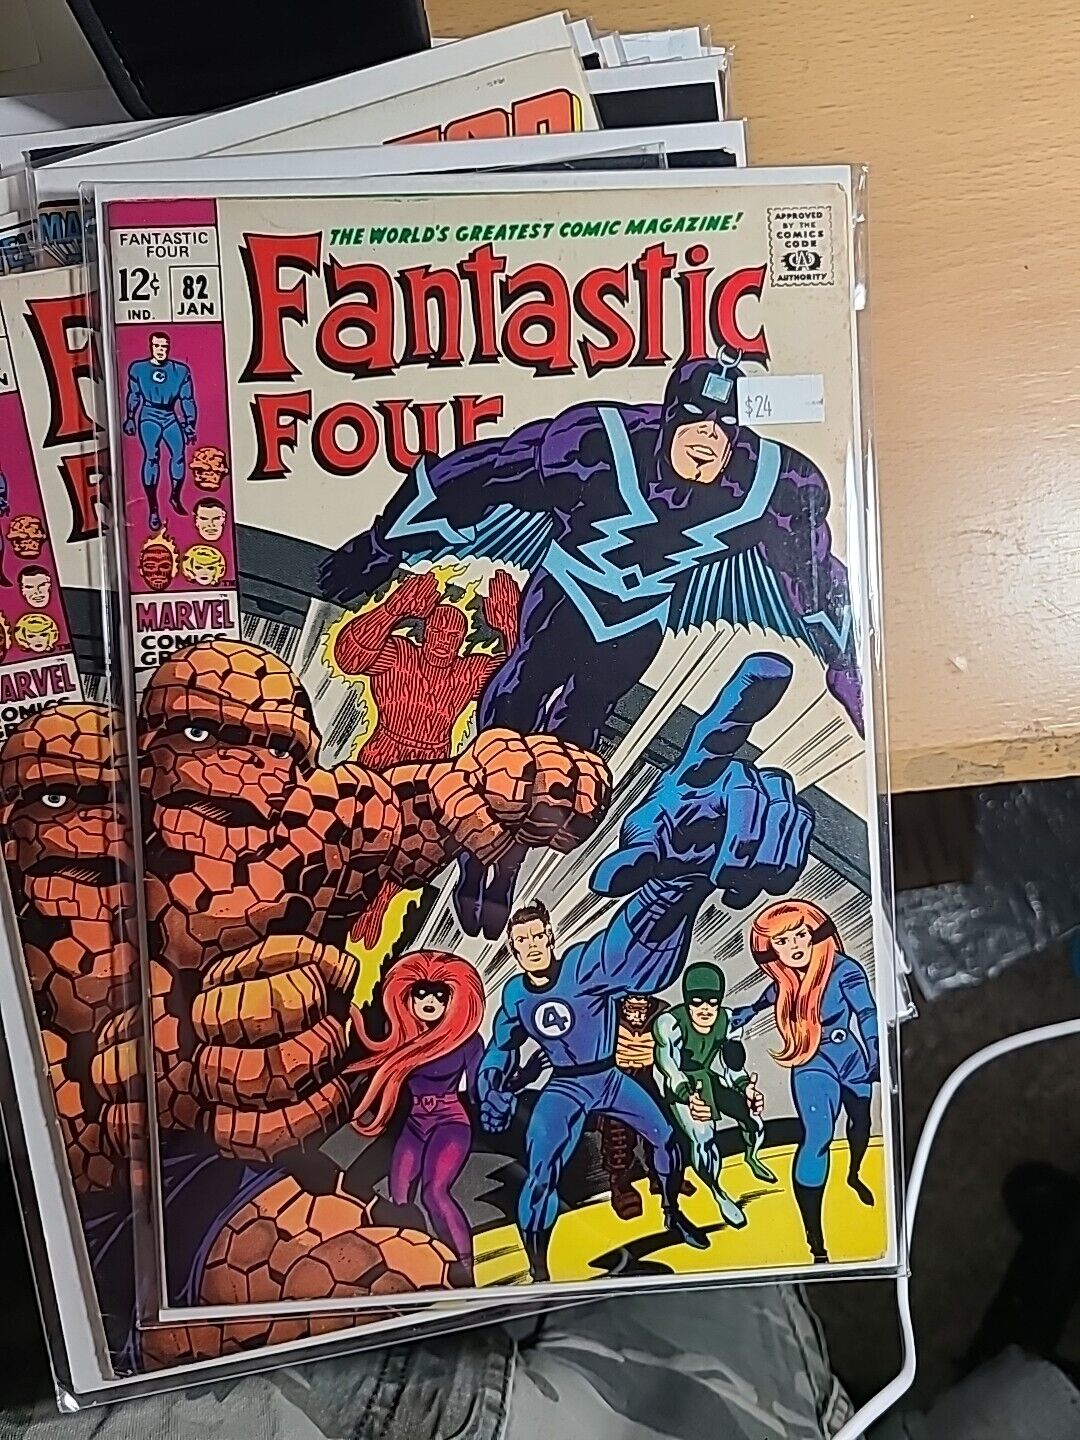 Fantastic Four # 82 1969 Black Bolt